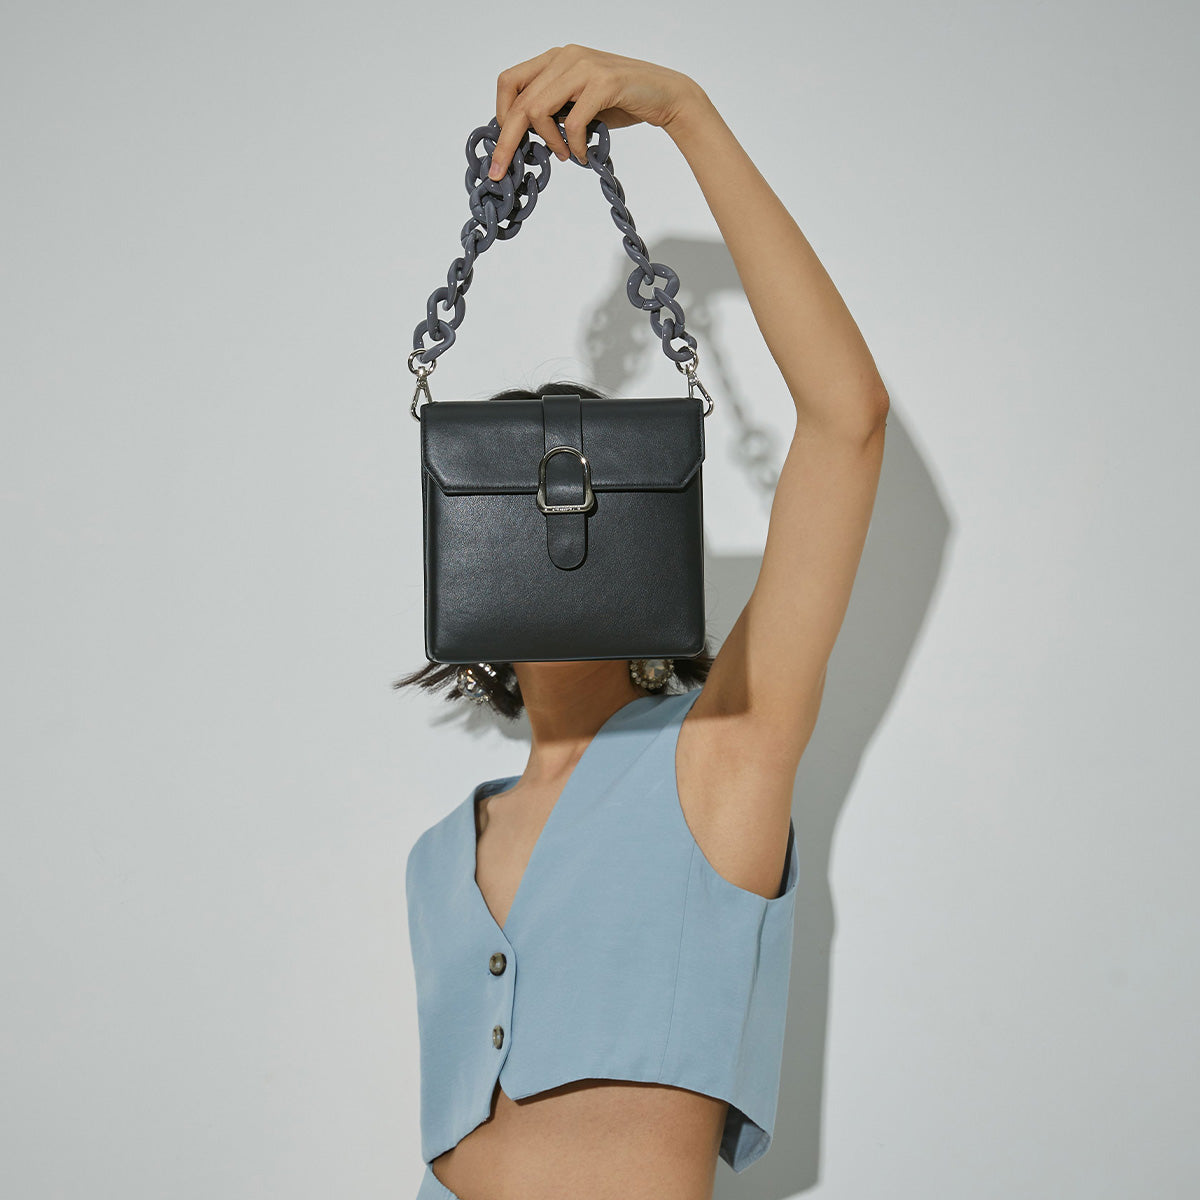 Oberon Design Leather Women's Cell Phone Handbag, Becca, Oak Leaves